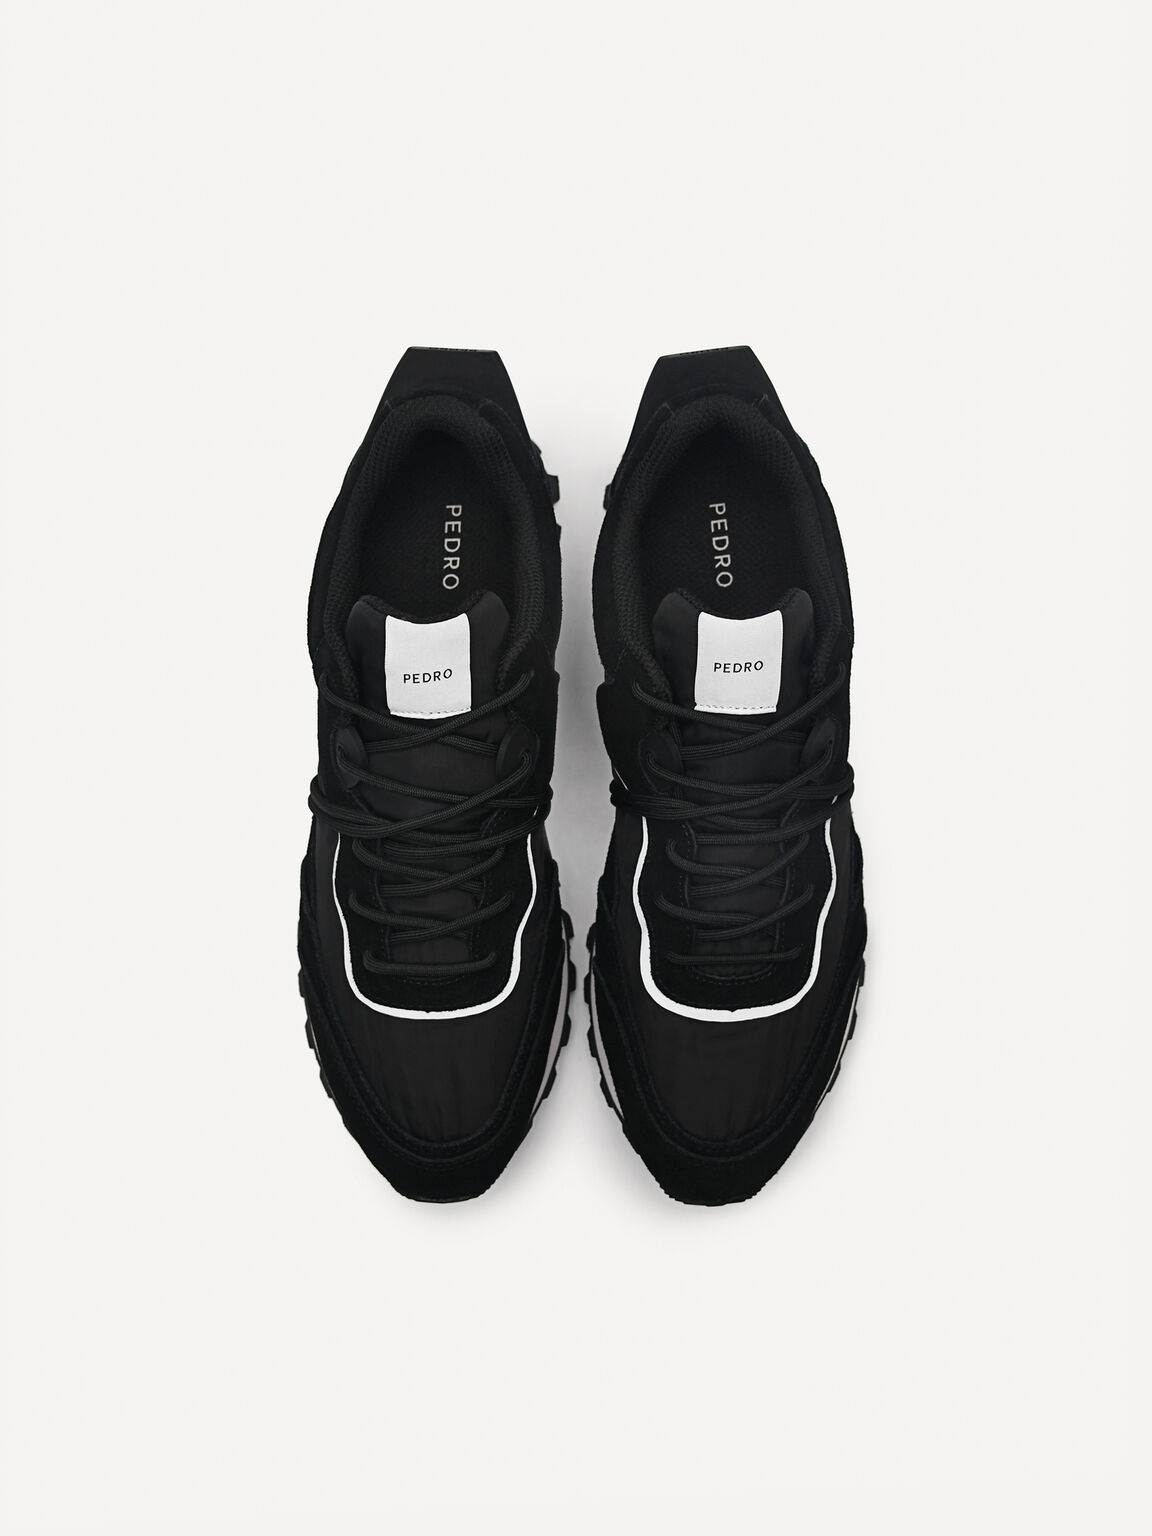 Black Suede Spur Sneakers - PEDRO SG